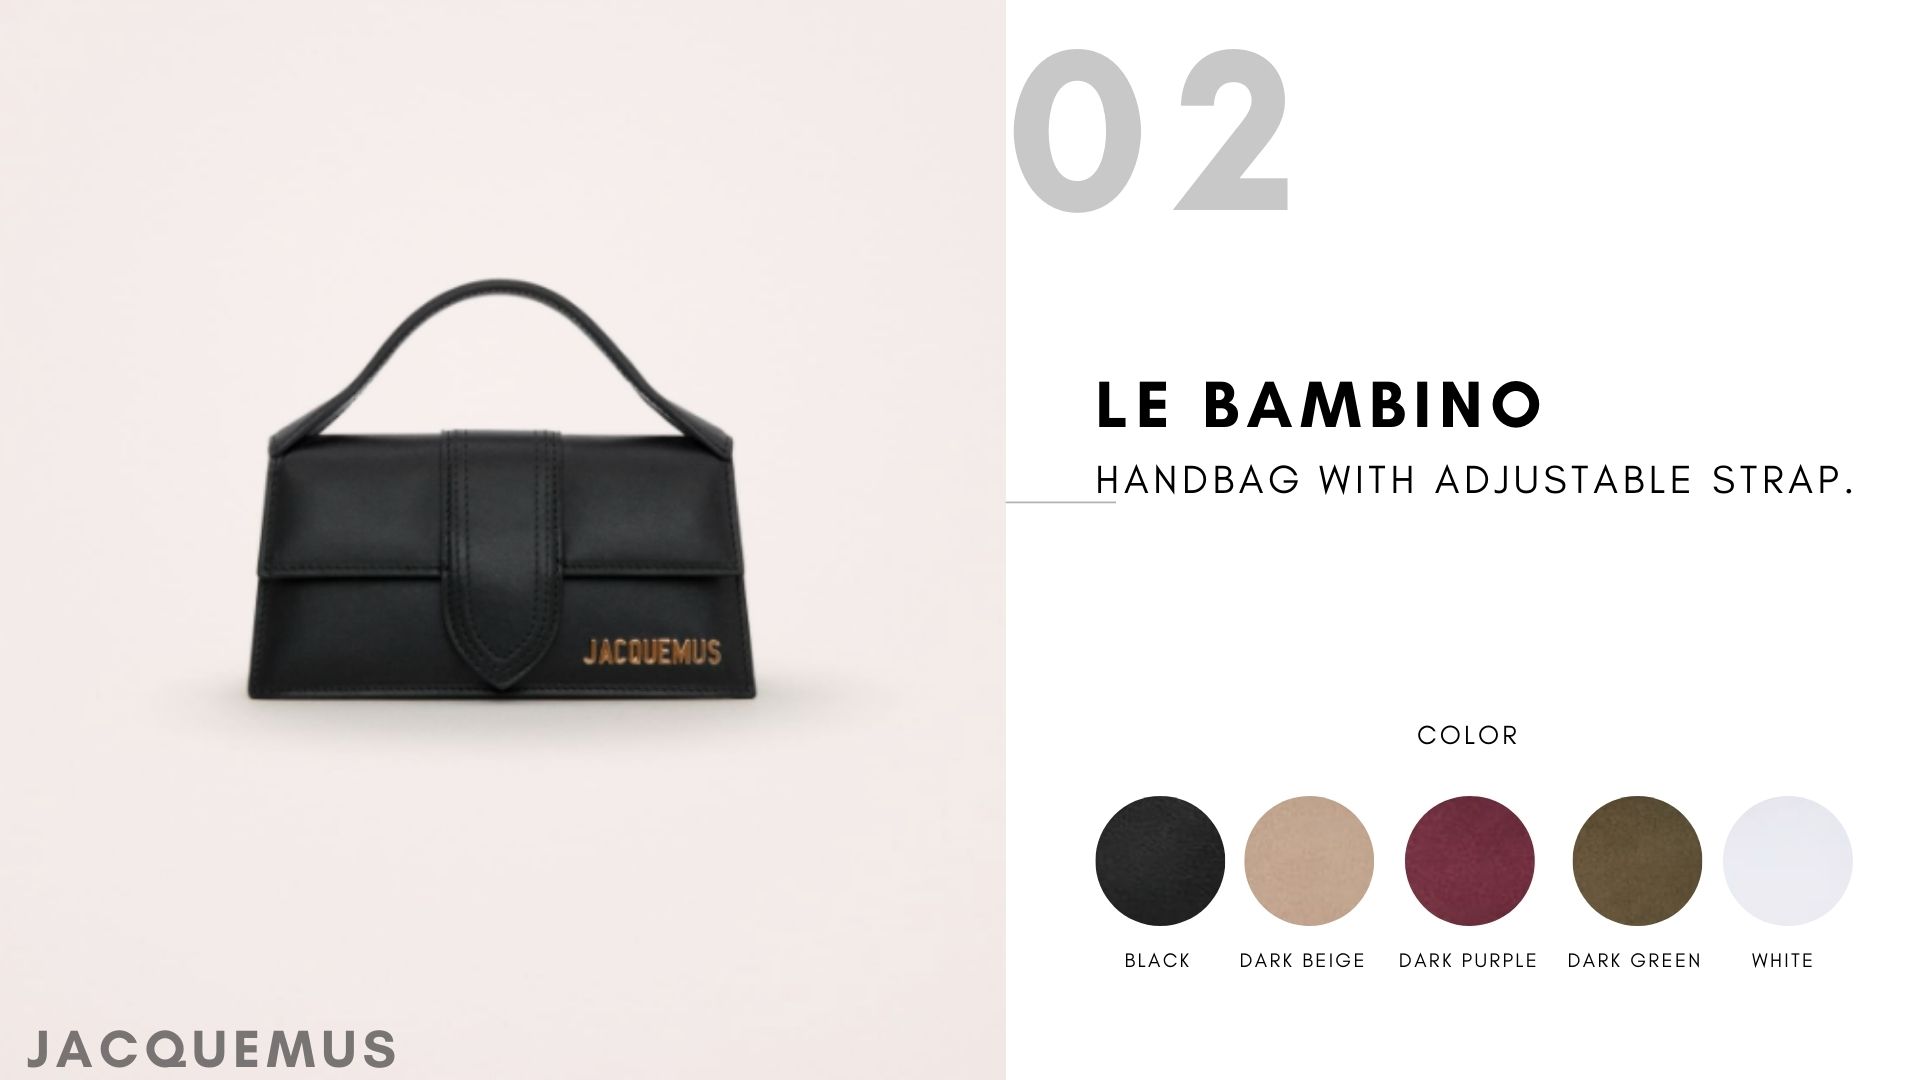 Le Bambino Handbag with adjustable strap.